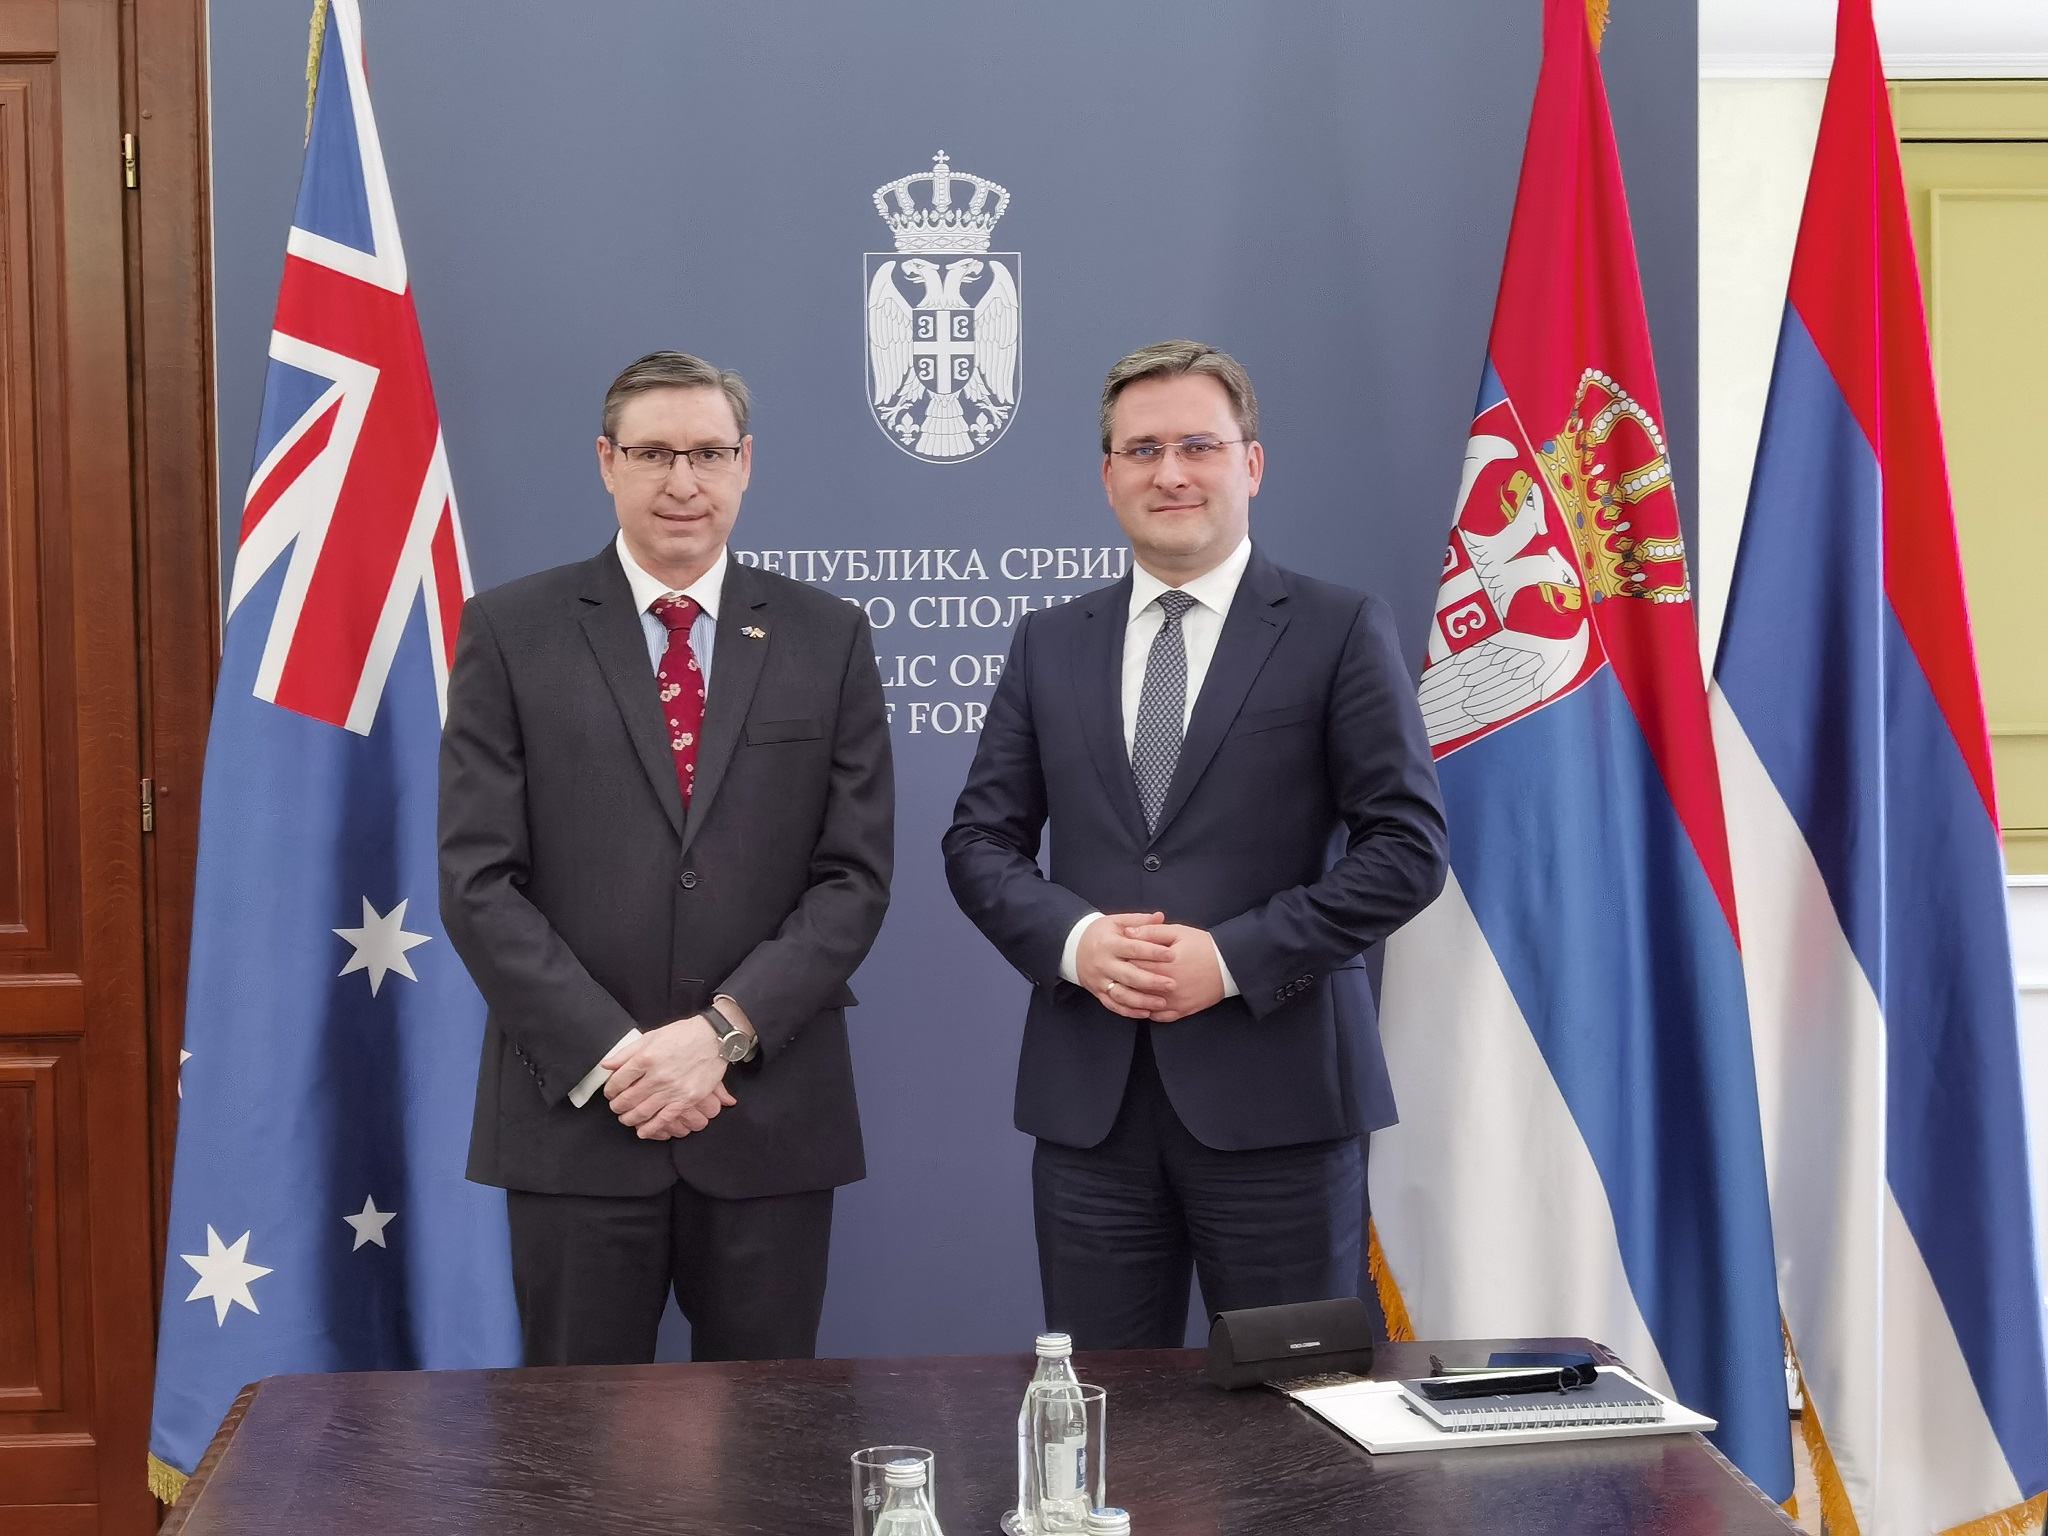 of The Republic of Serbia in Australia